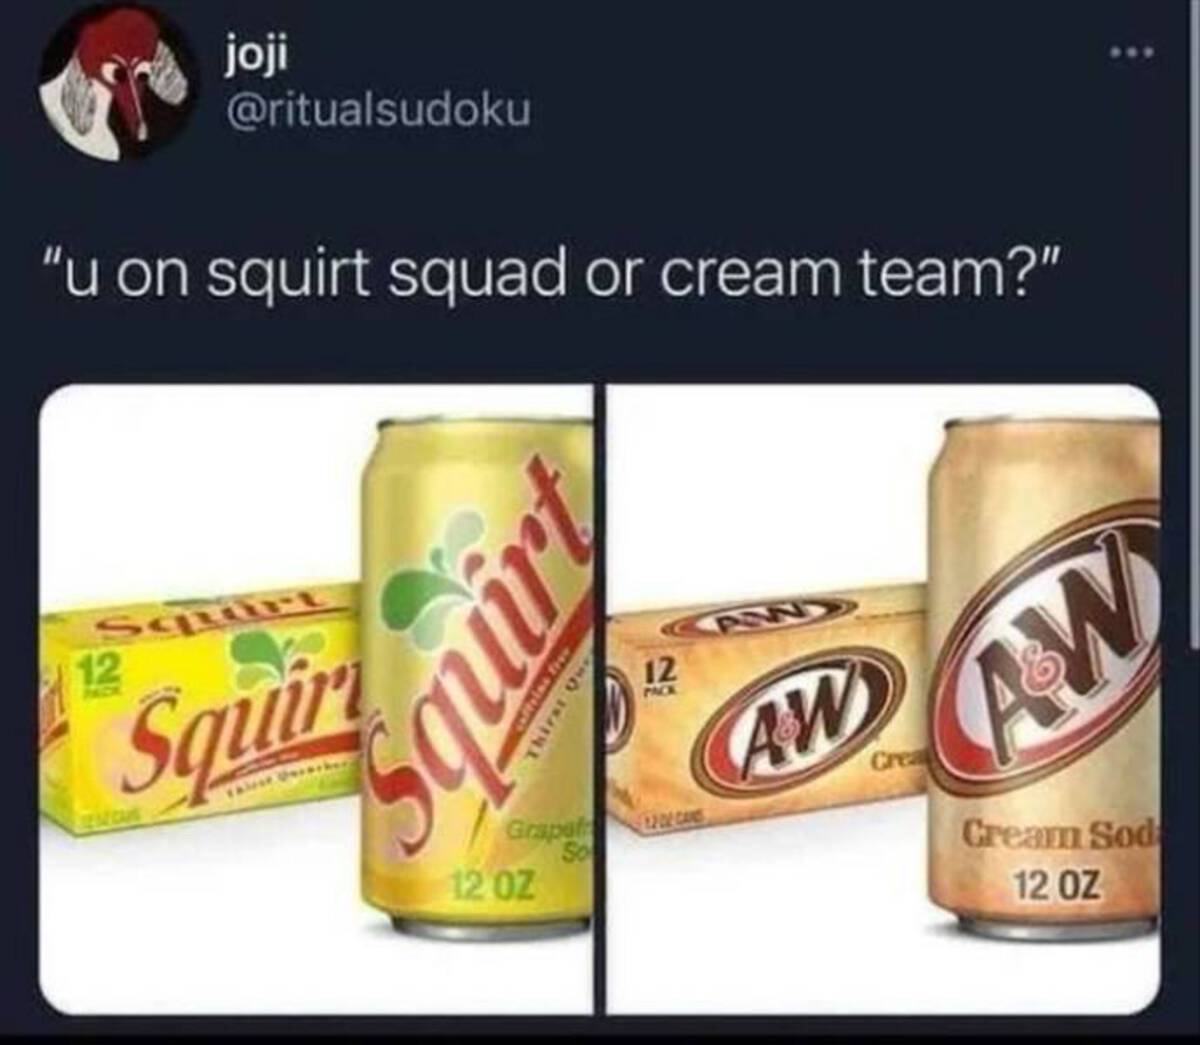 squirt squad or cream team meme - joji "u on squirt squad or cream team?" 12 Squi Squir Diana Grapat 1207 12 Pack Aw Aw Cream Sod 12 02